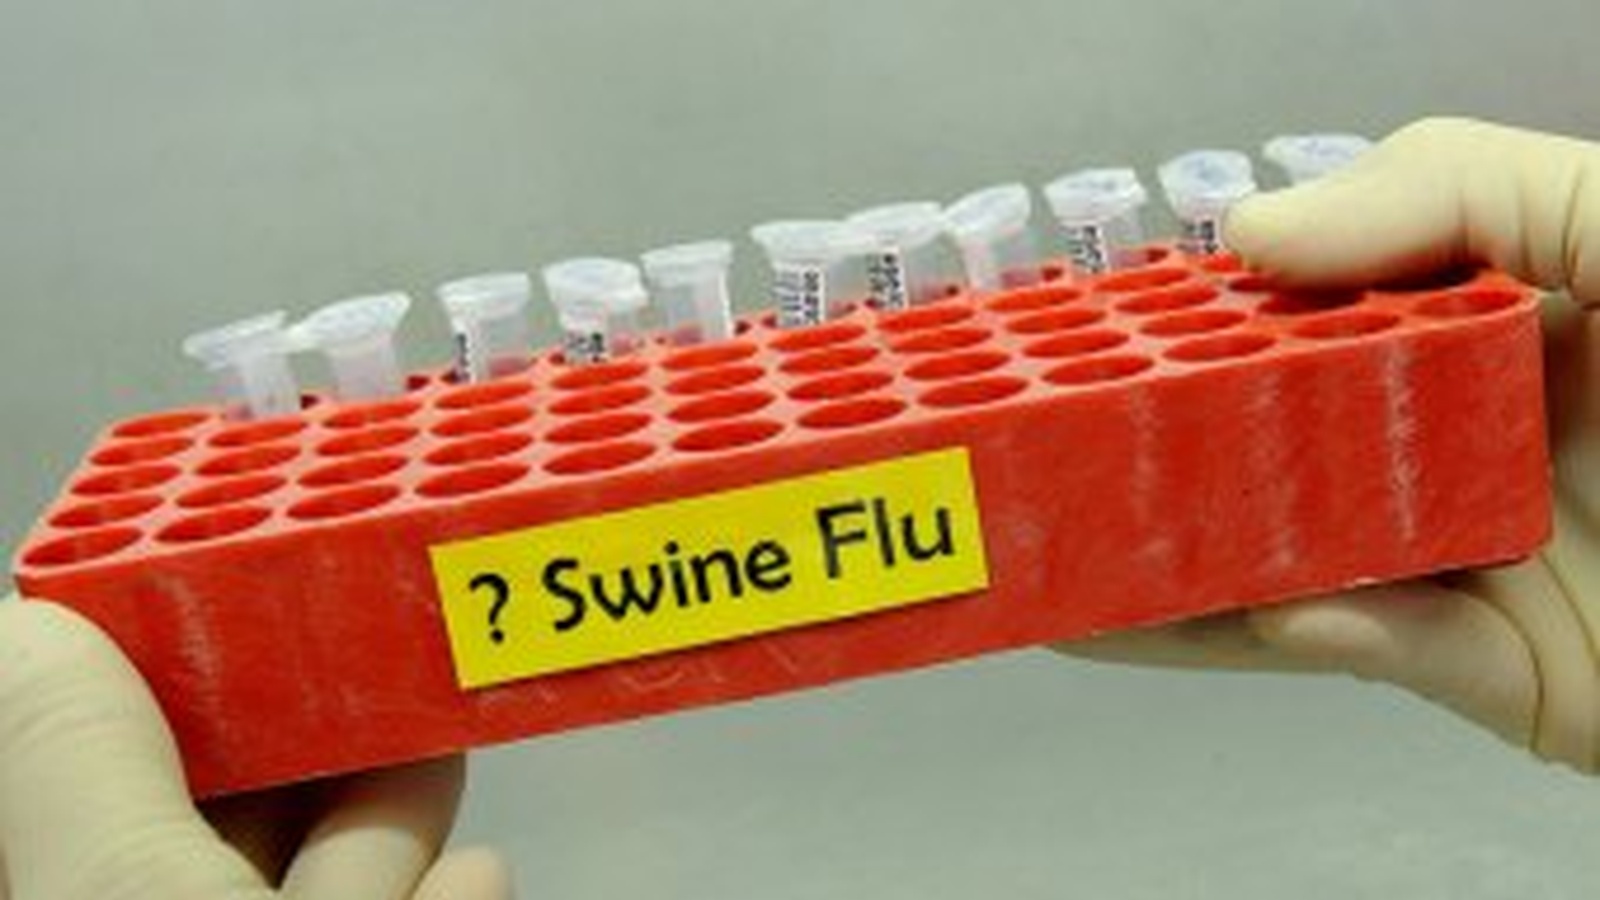 Warning: Swine Flu H1N1 Vaccine Is Not Safe!